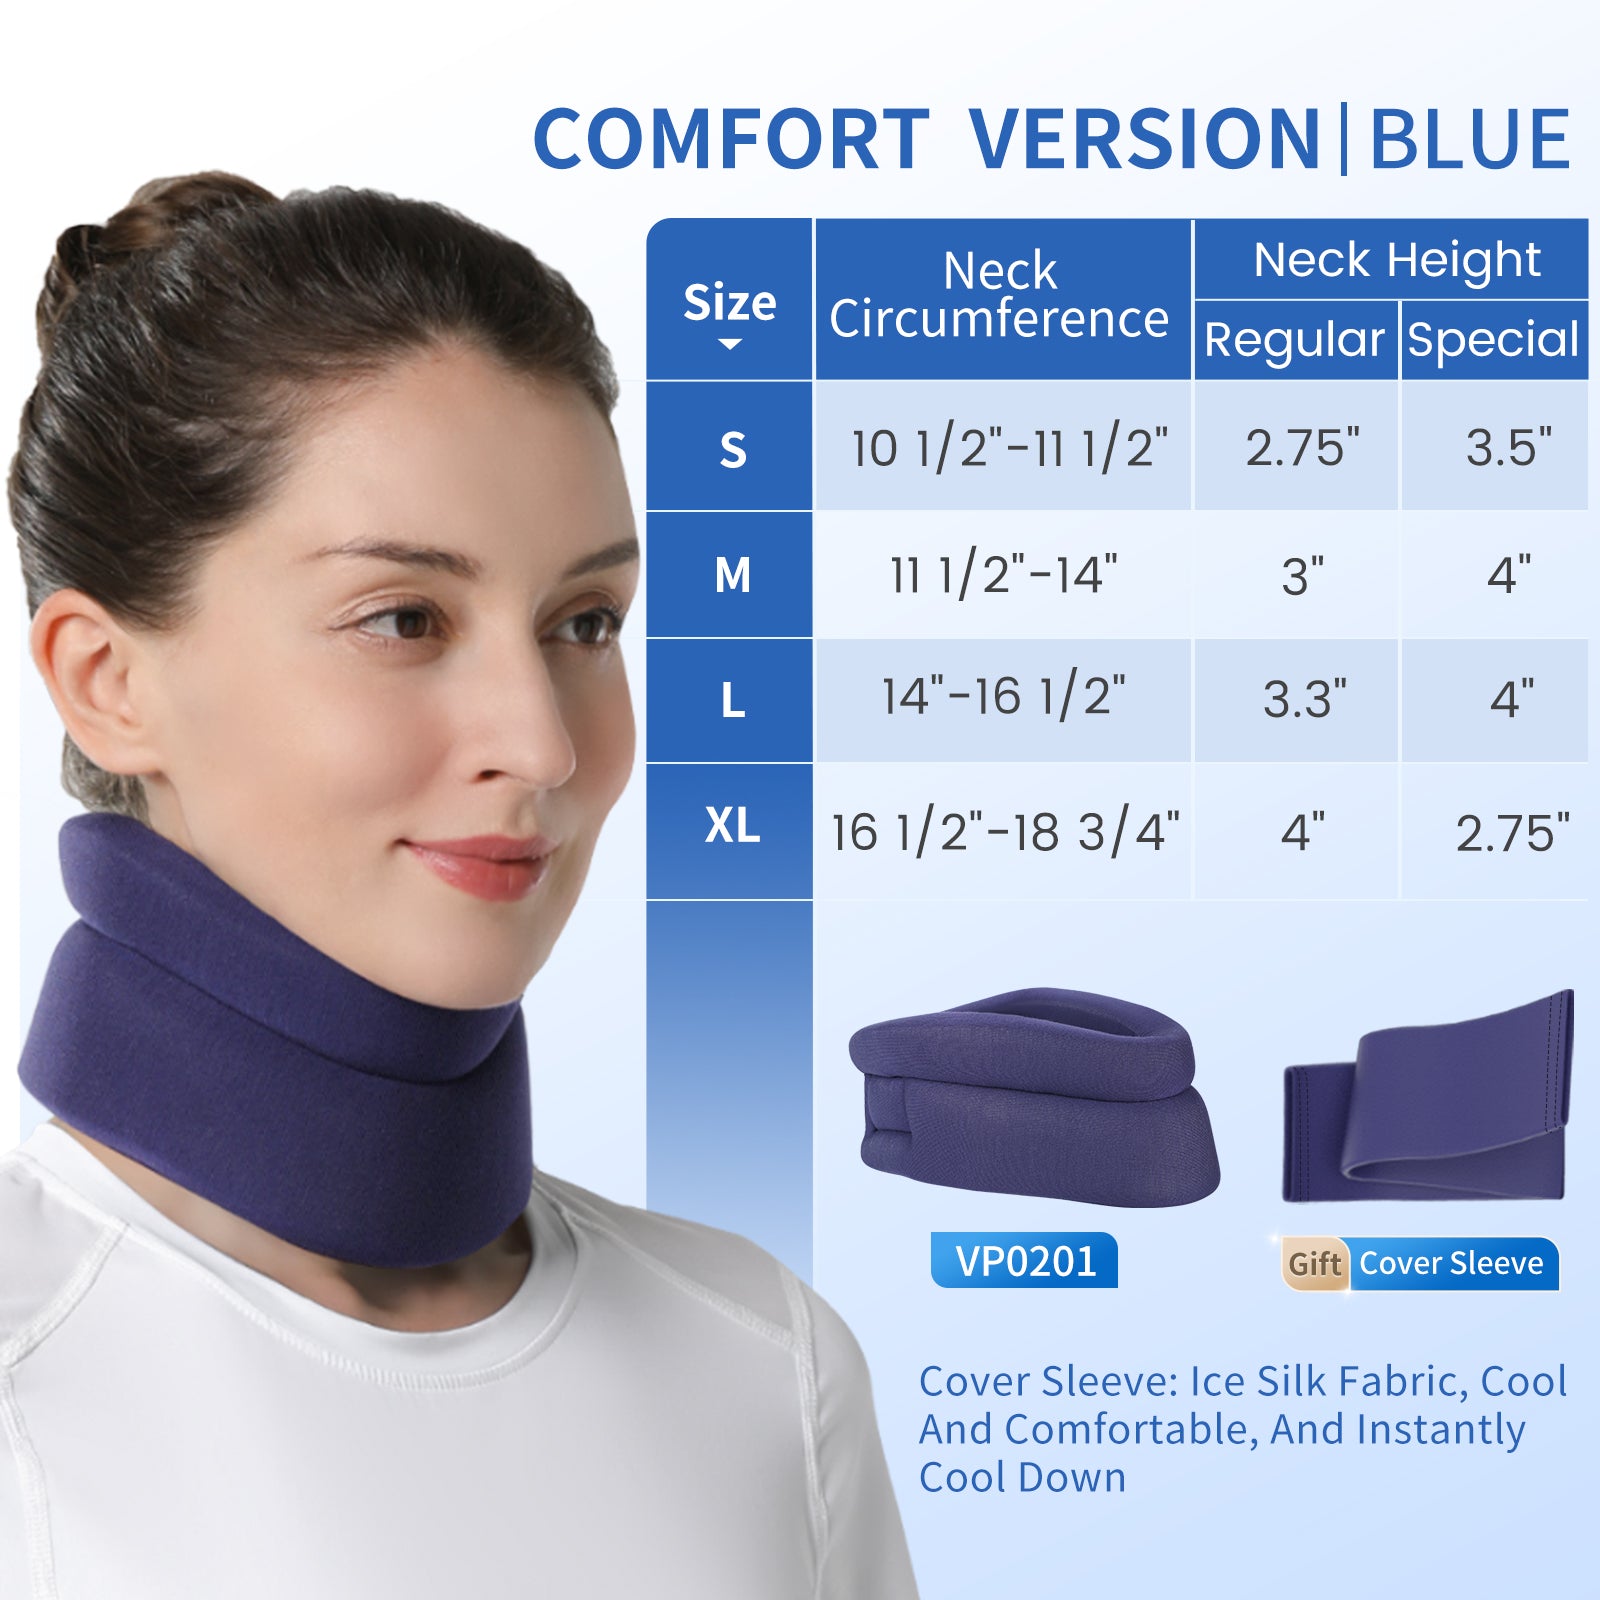 VP0201 VELPEAU Neck Brace Comfort Version